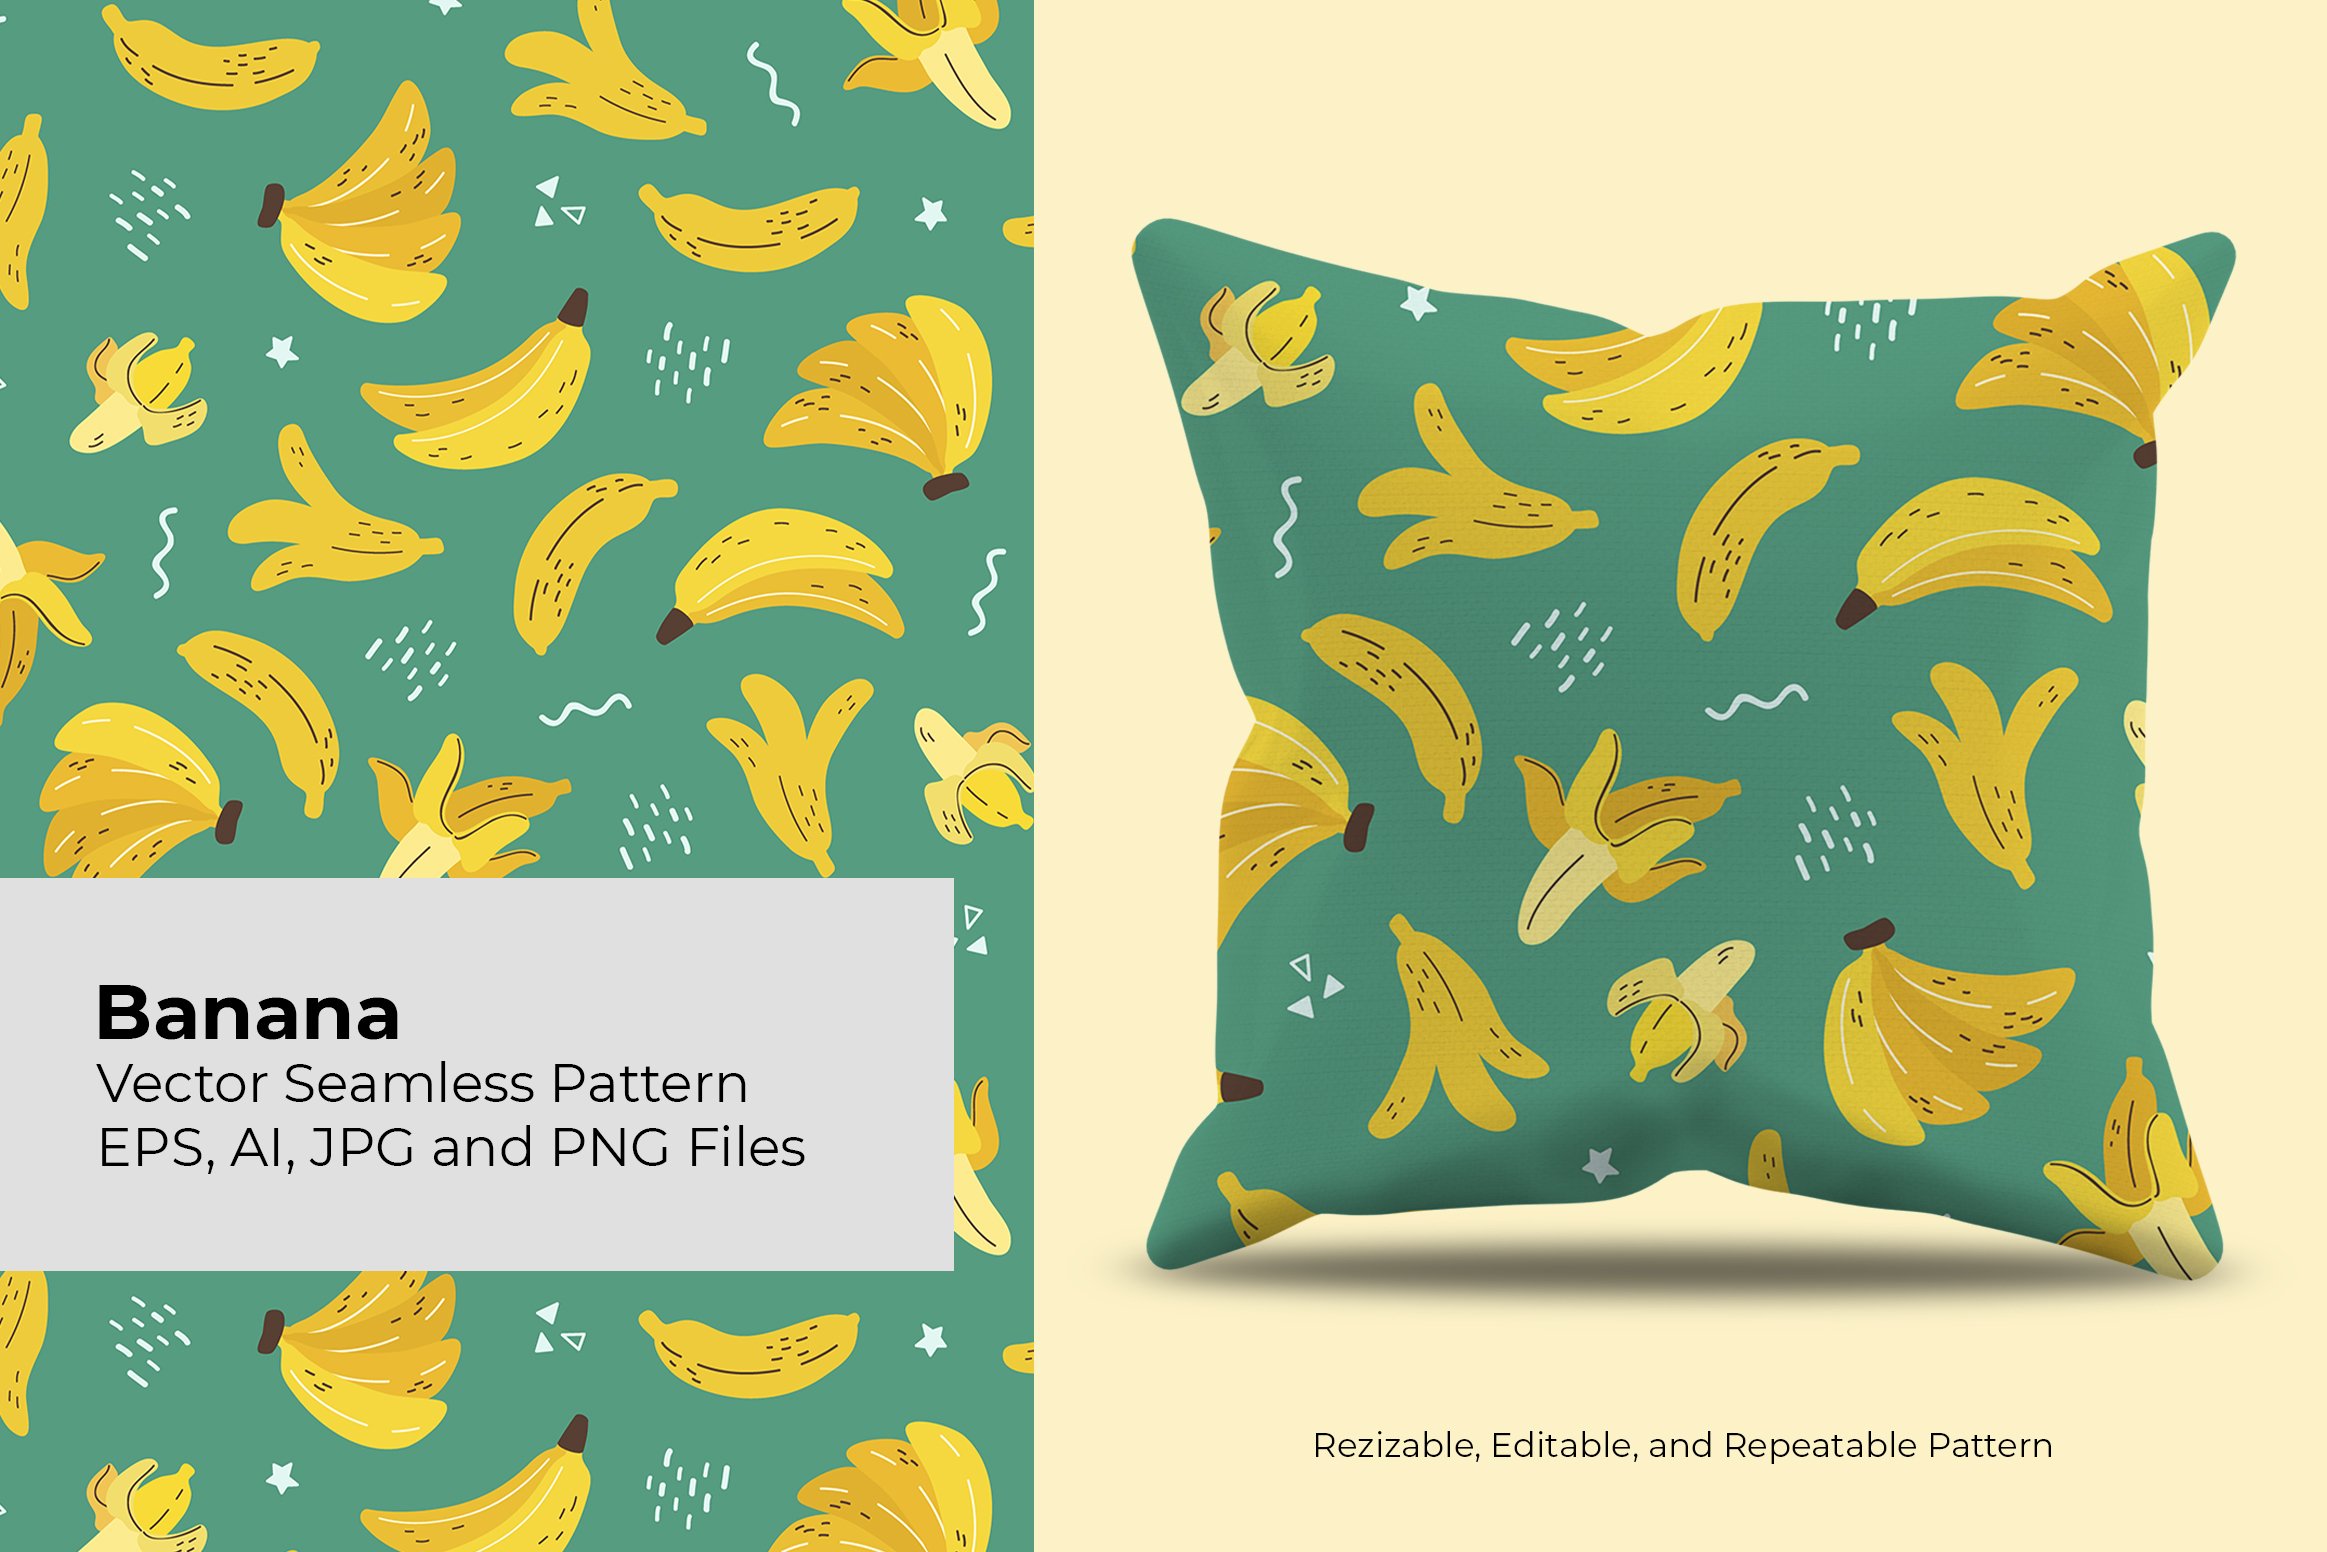 Banana pattern for differen textures.